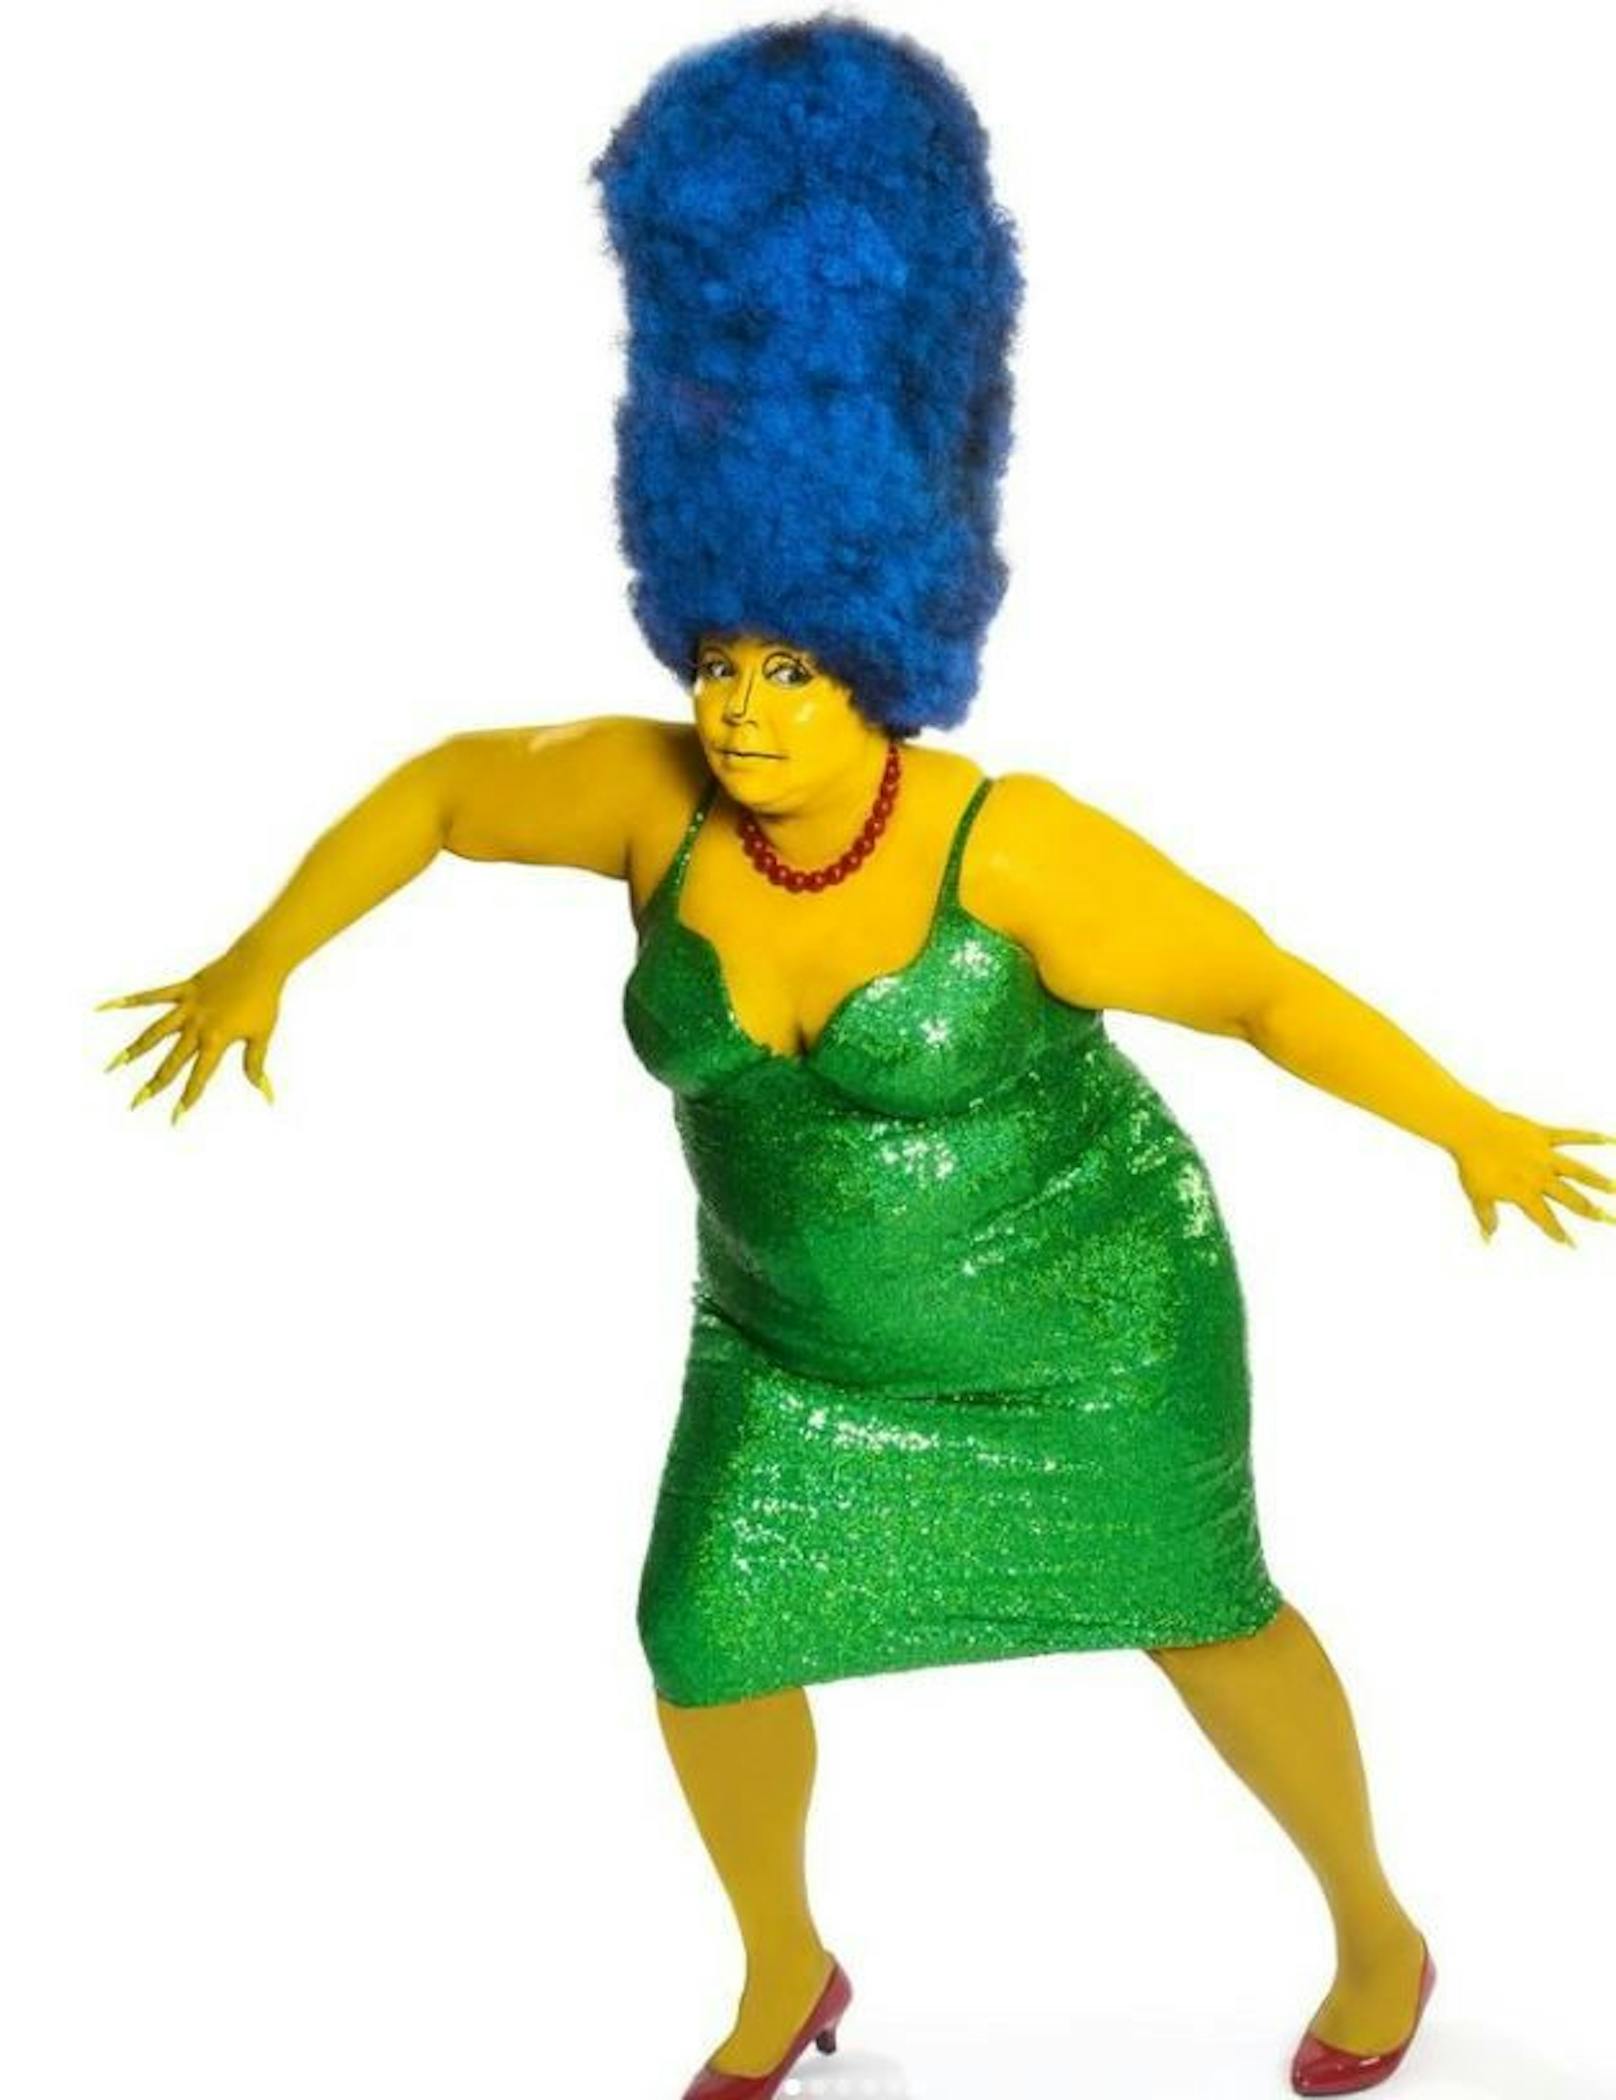 Sängerin Lizzo als Marge Simpson.